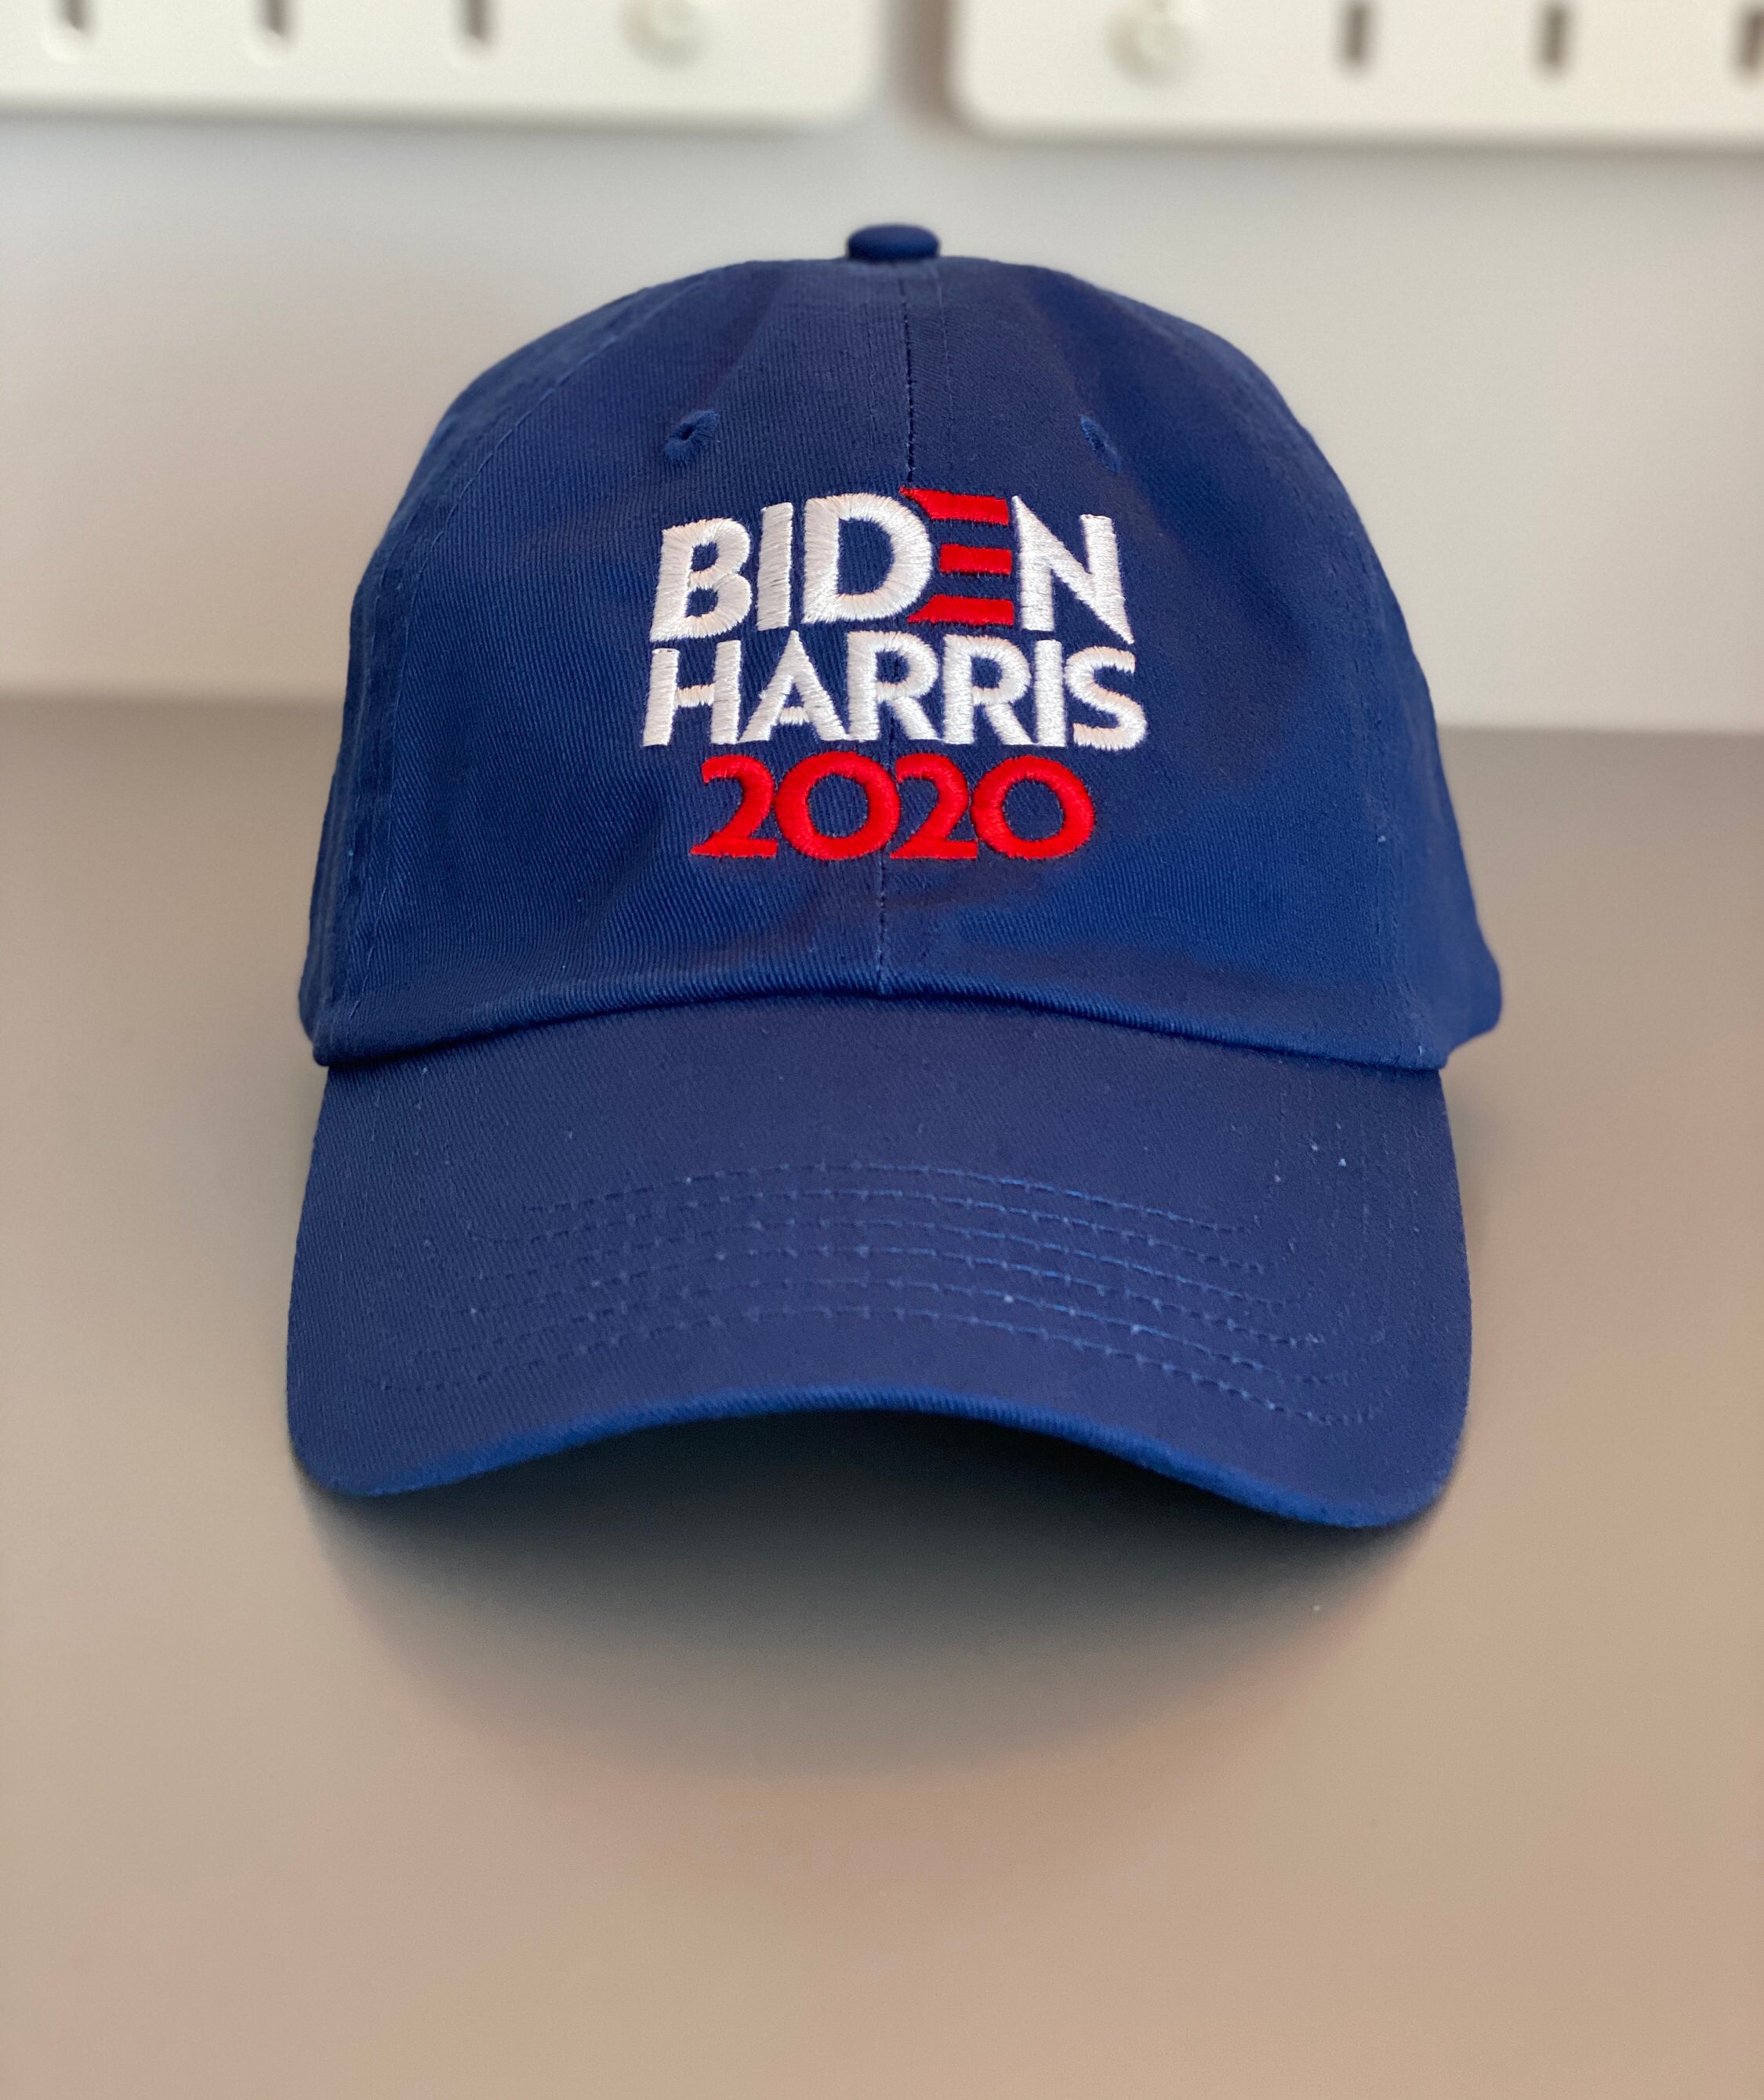 Biden Harris 2020 Hat Vote for Joe Biden Kamala embroidered | Etsy